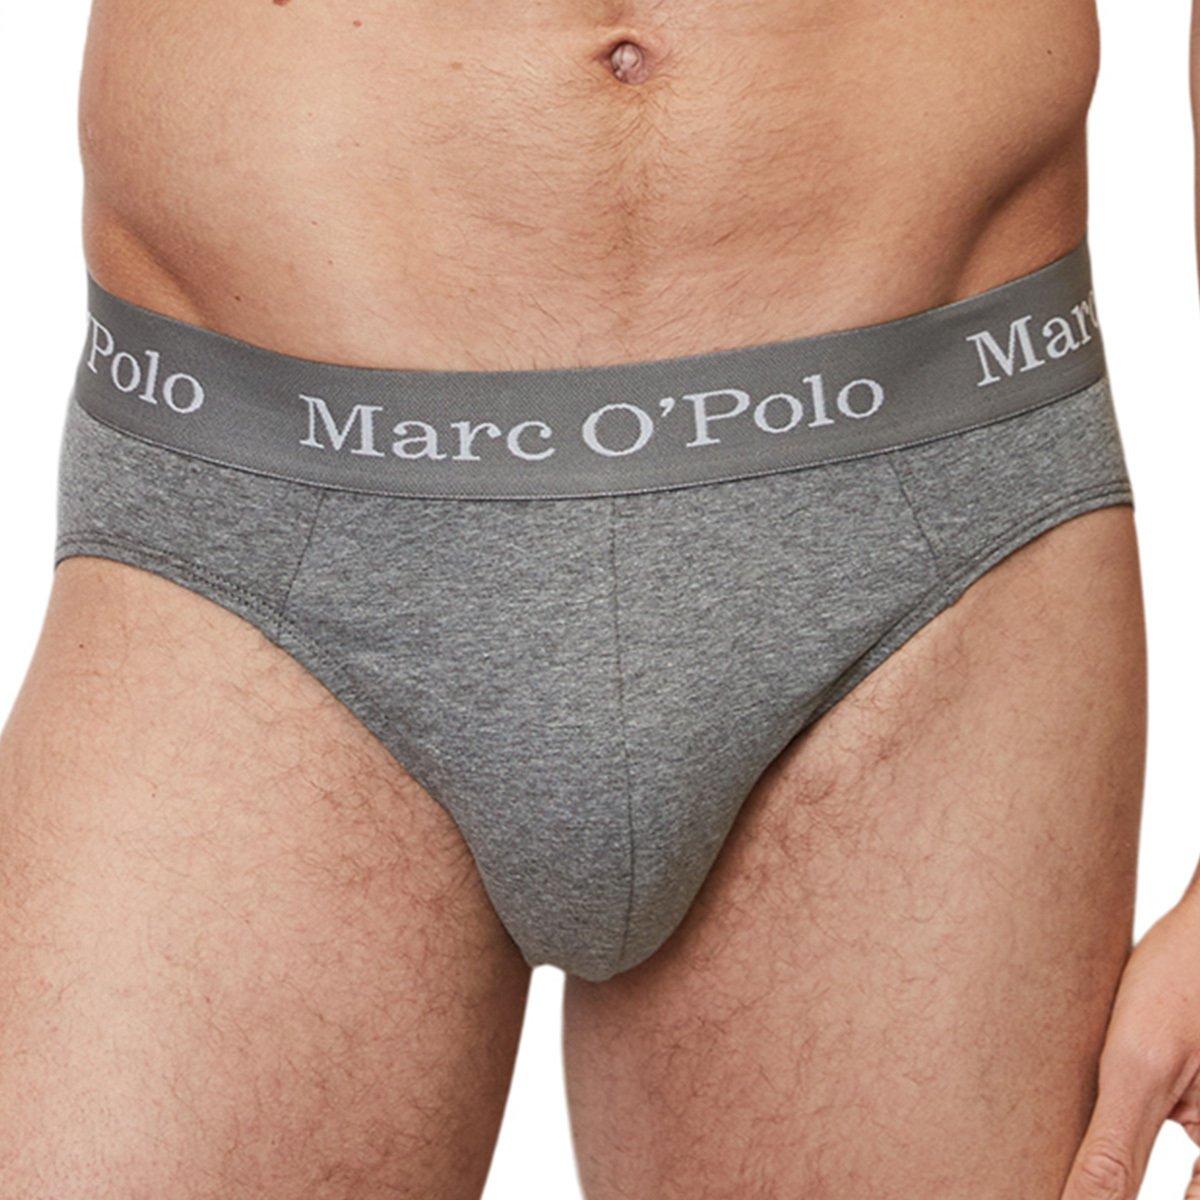 Marc O'Polo  Elements Bio Coton lot de 3 - slips 